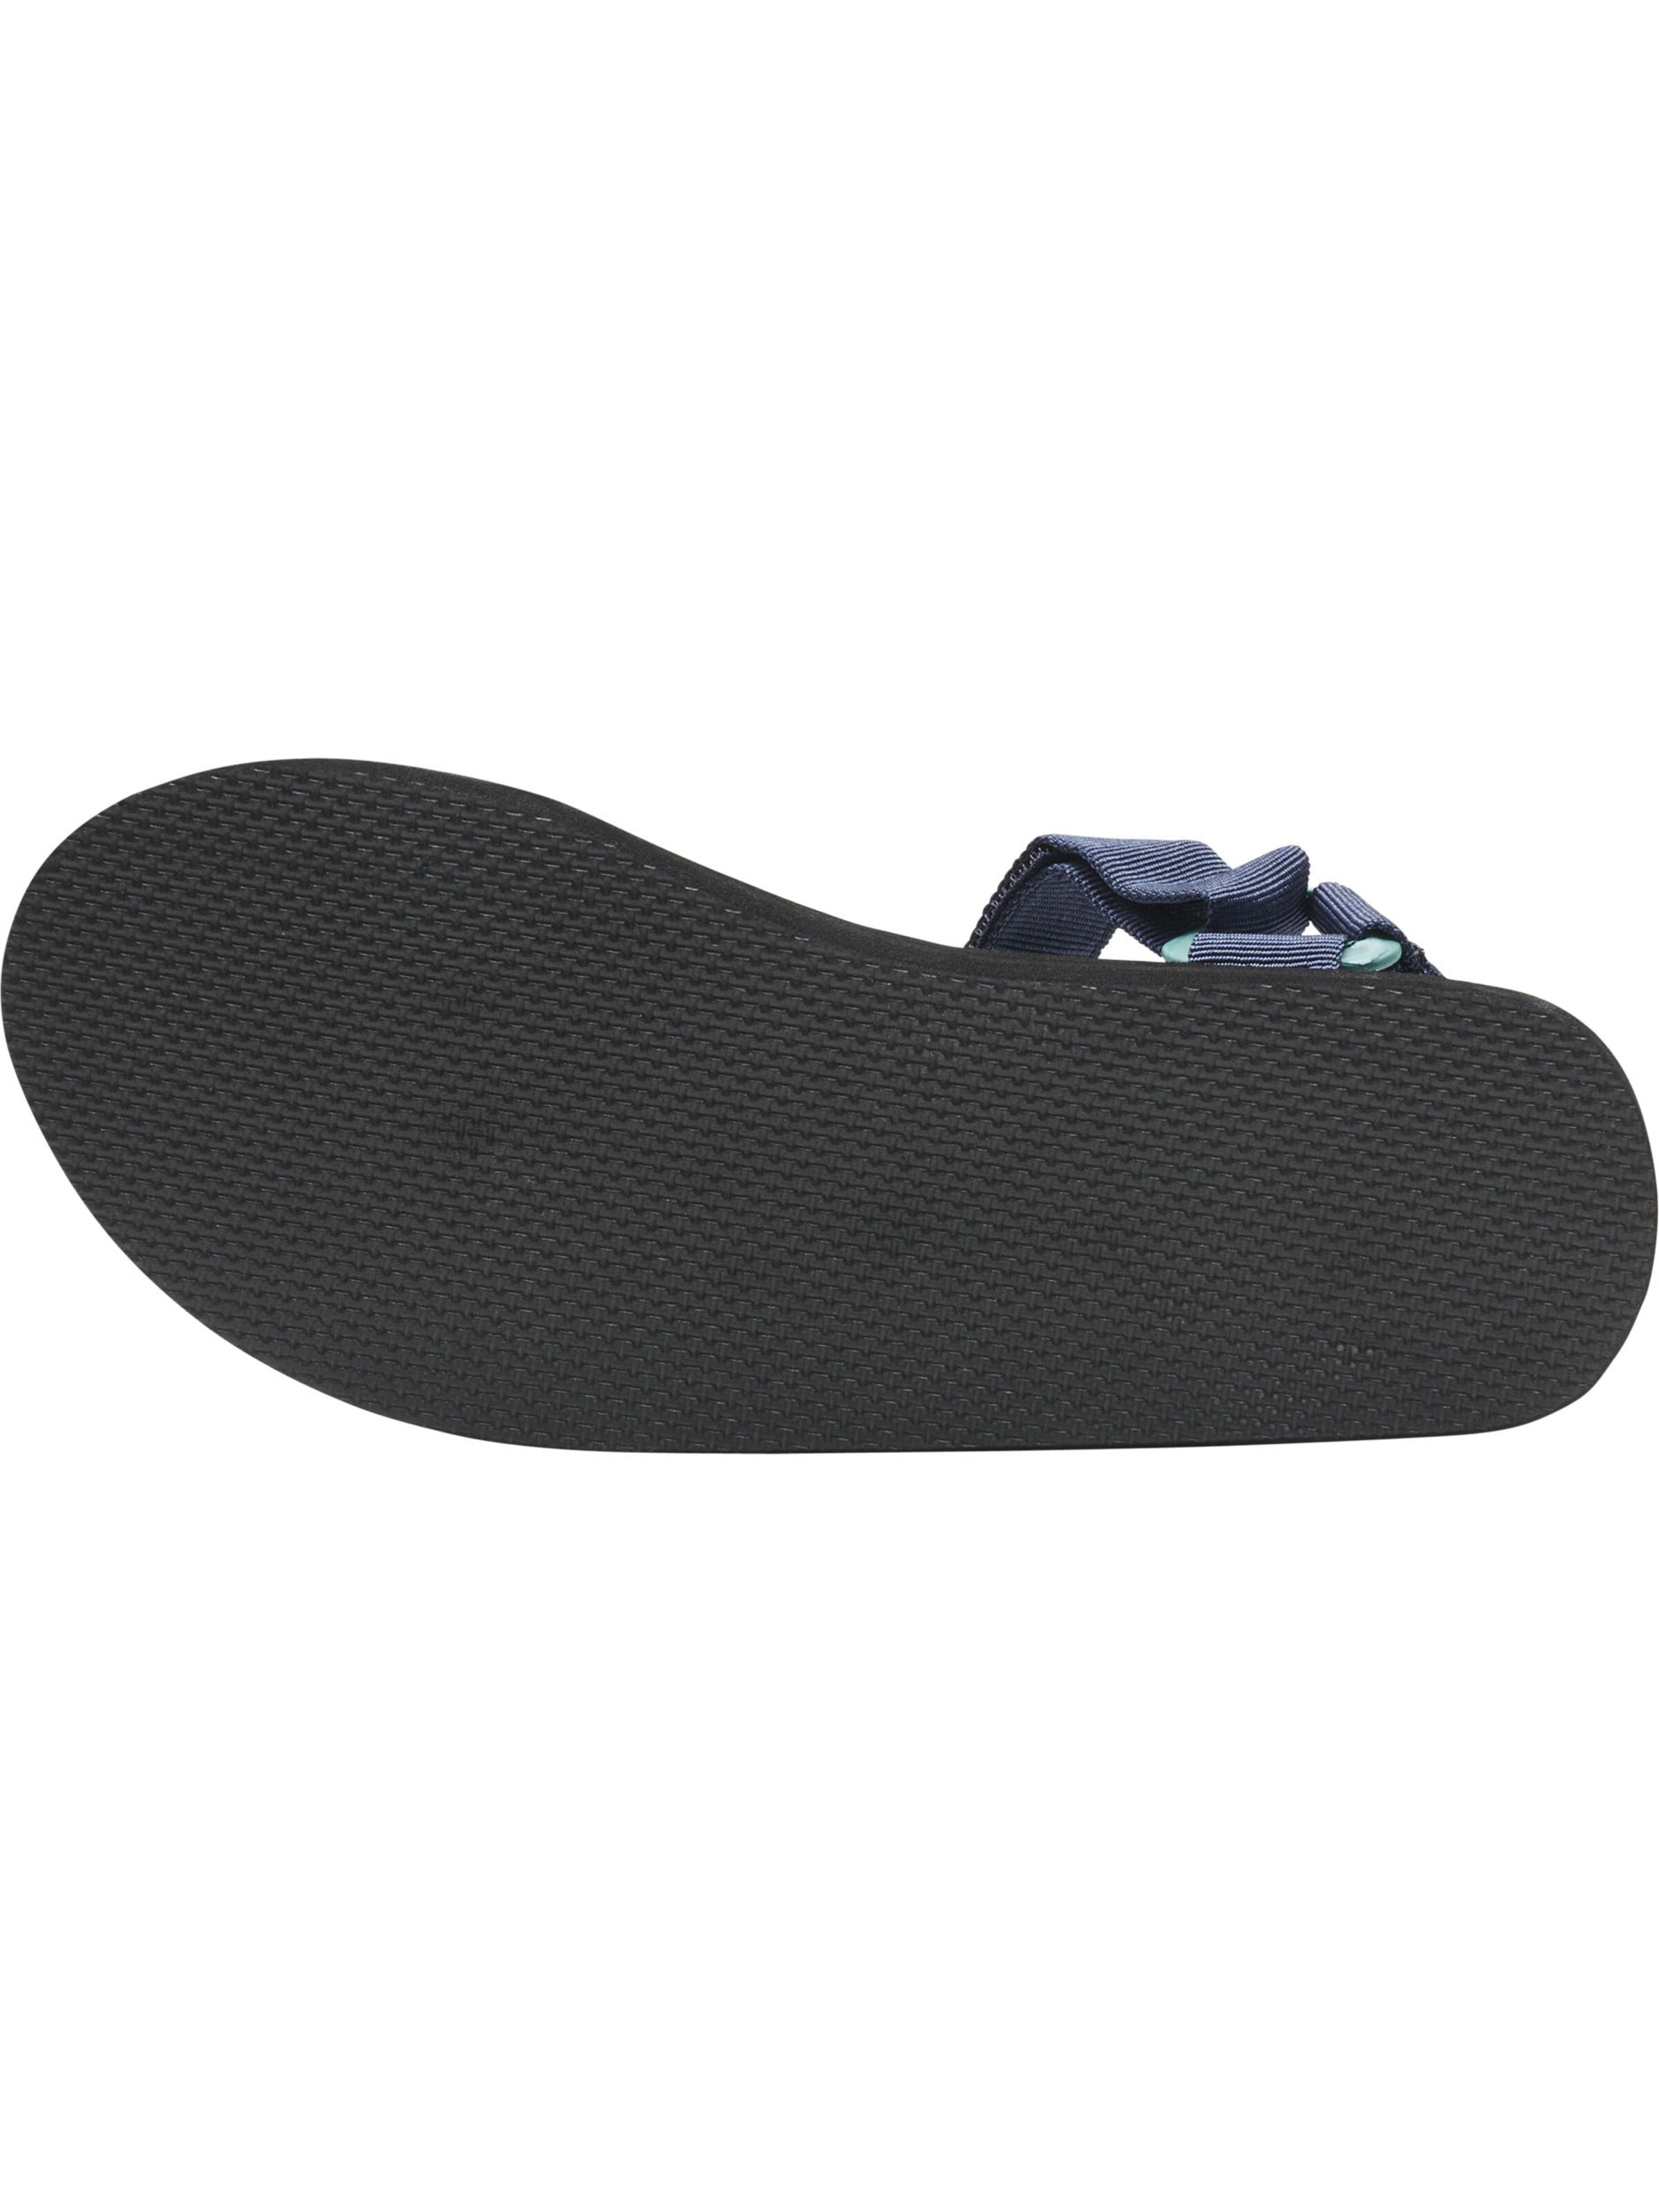 Männer Offene Schuhe Hummel Sandale in Nachtblau, Neonblau - ZZ96356